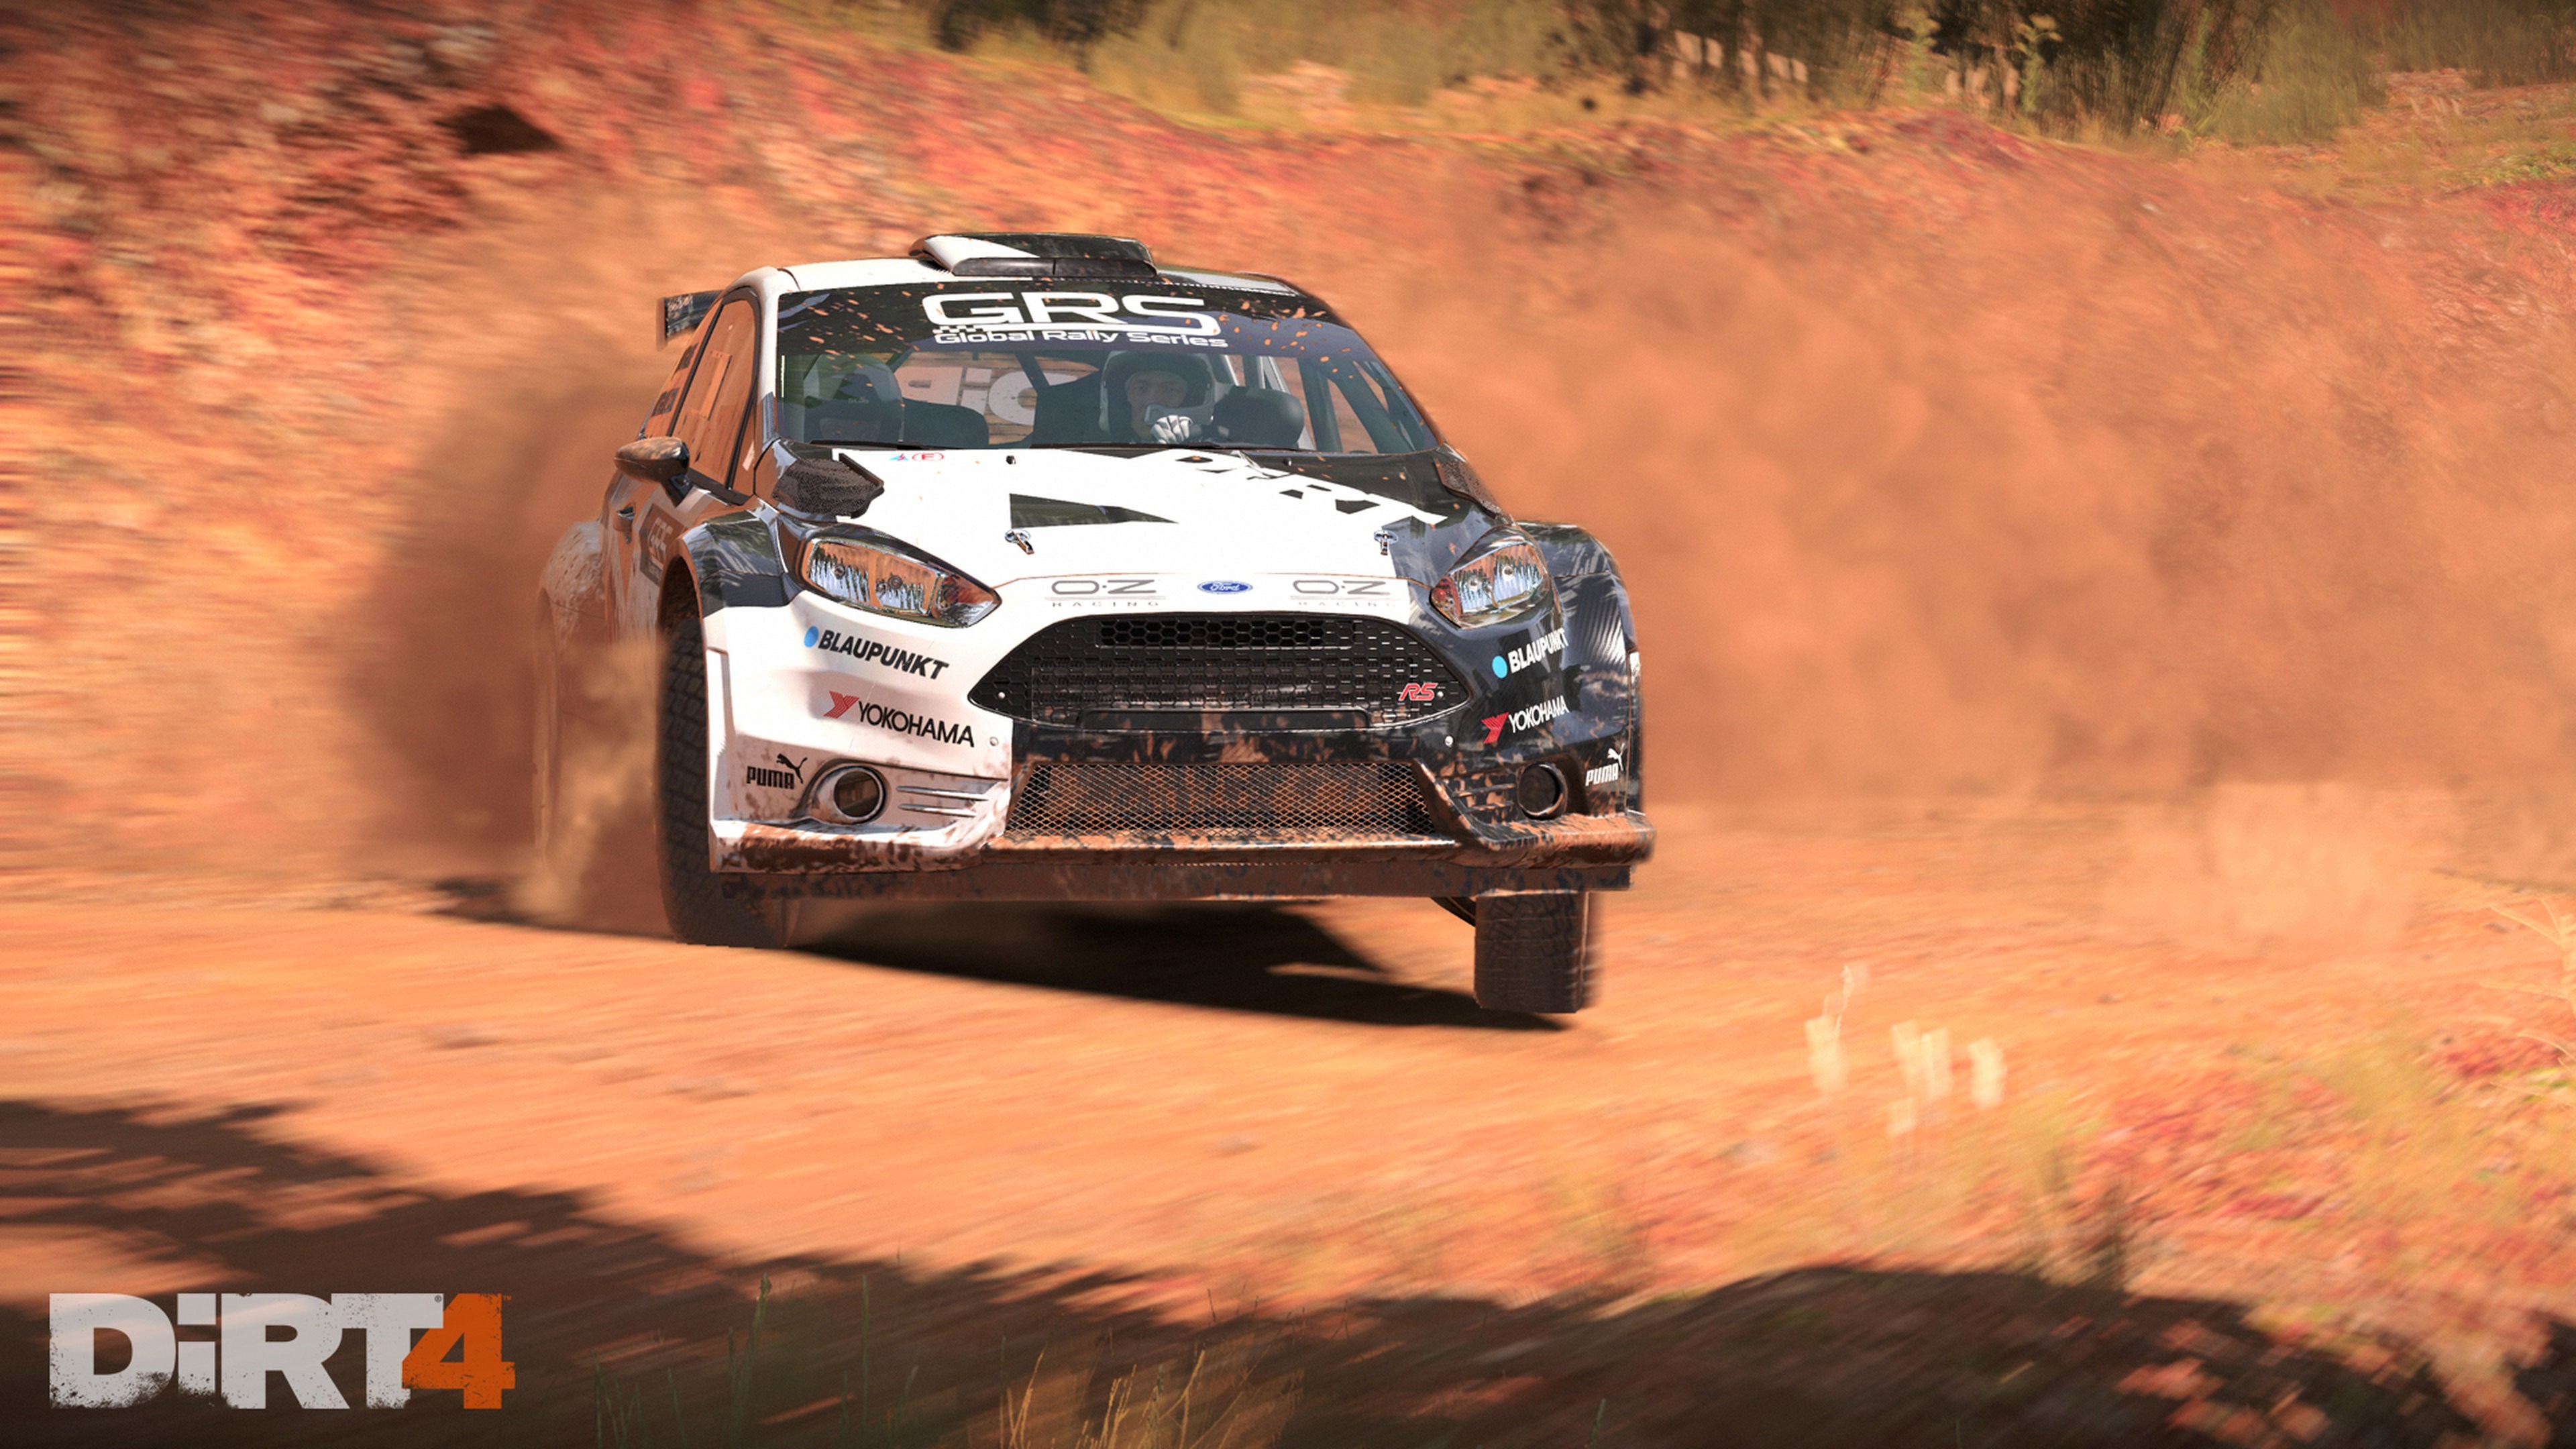 Dirt track racing video game
